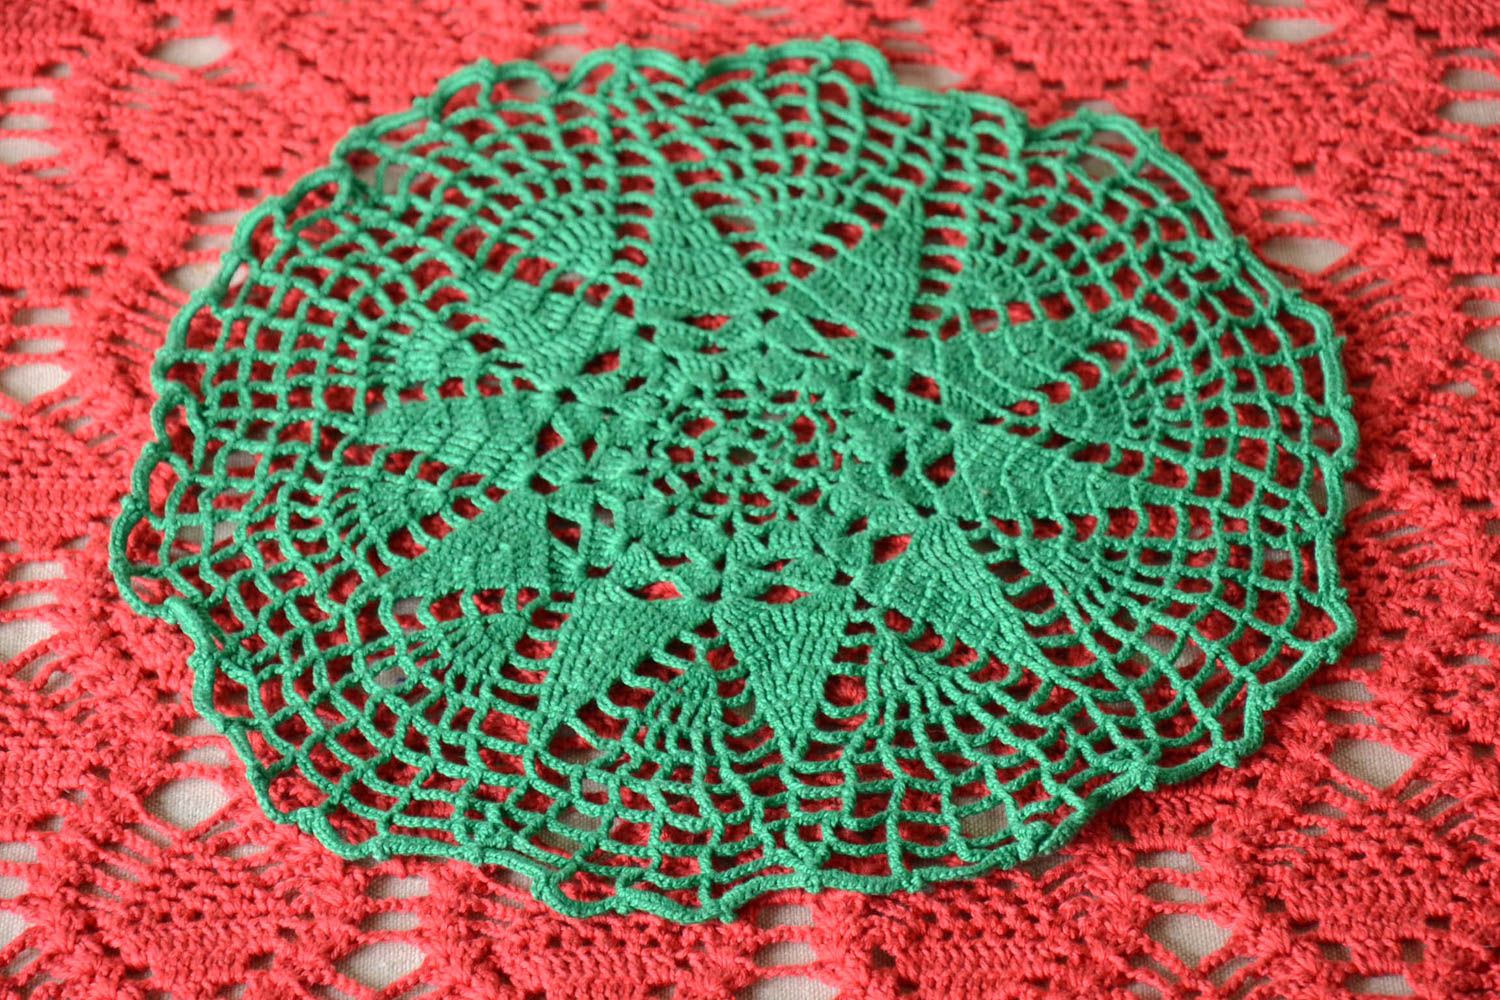 Servilleta crochet hecha a mano textil para el hogar decoración de mesa foto 1